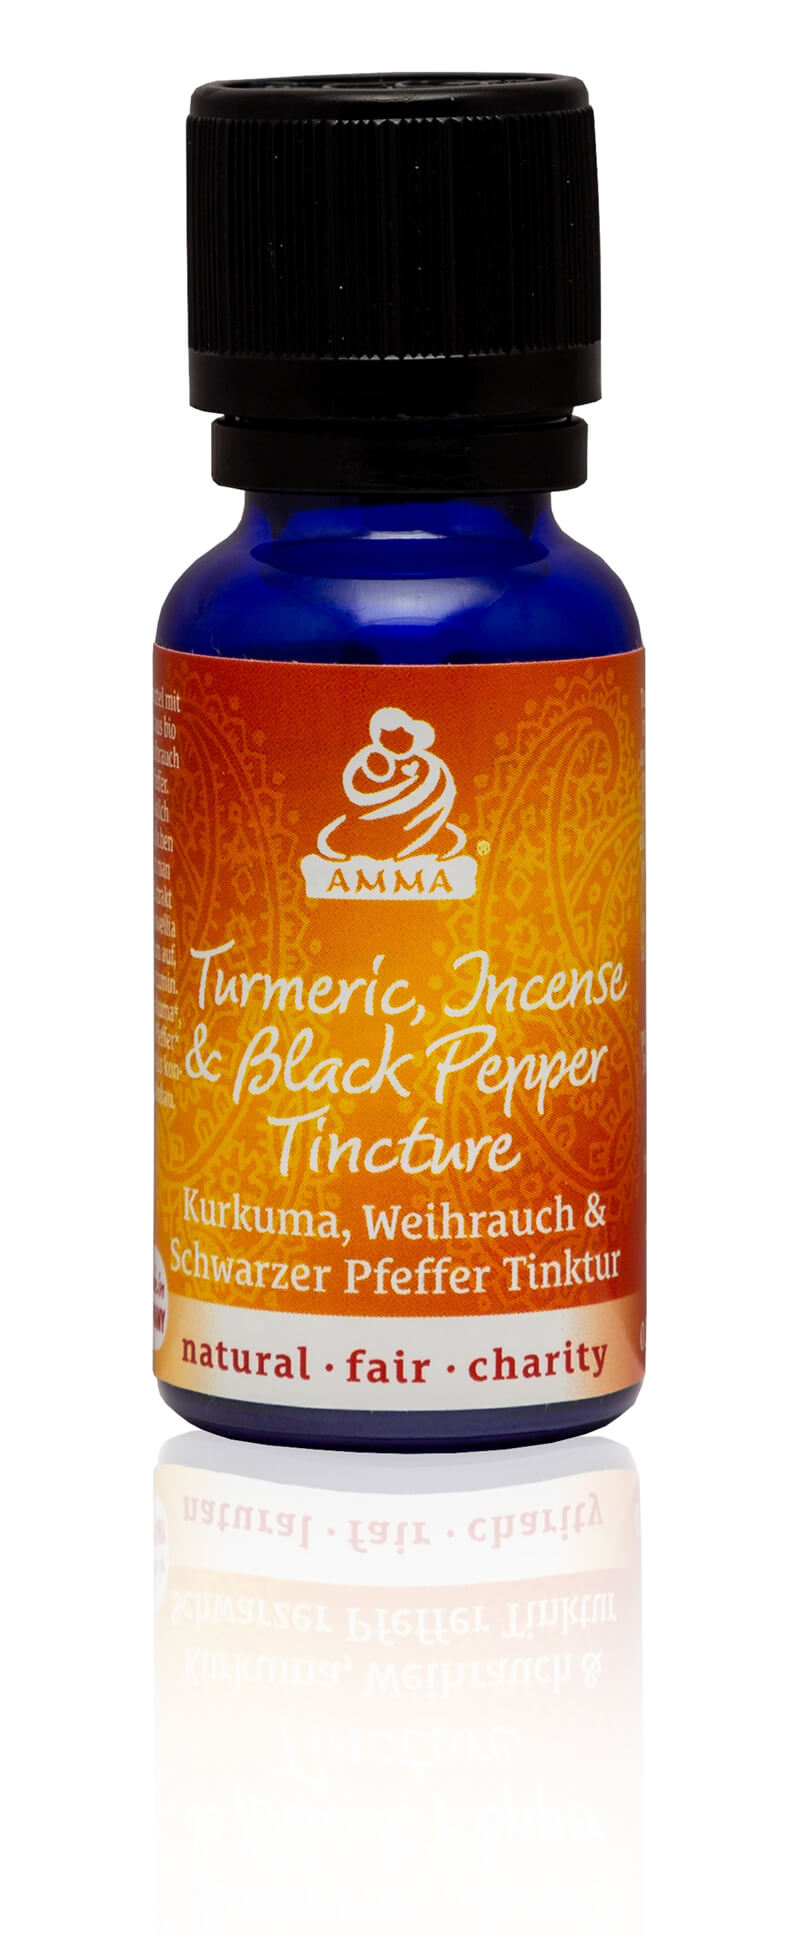 Turmeric, Frankincense and Black Pepper Tincture, organic